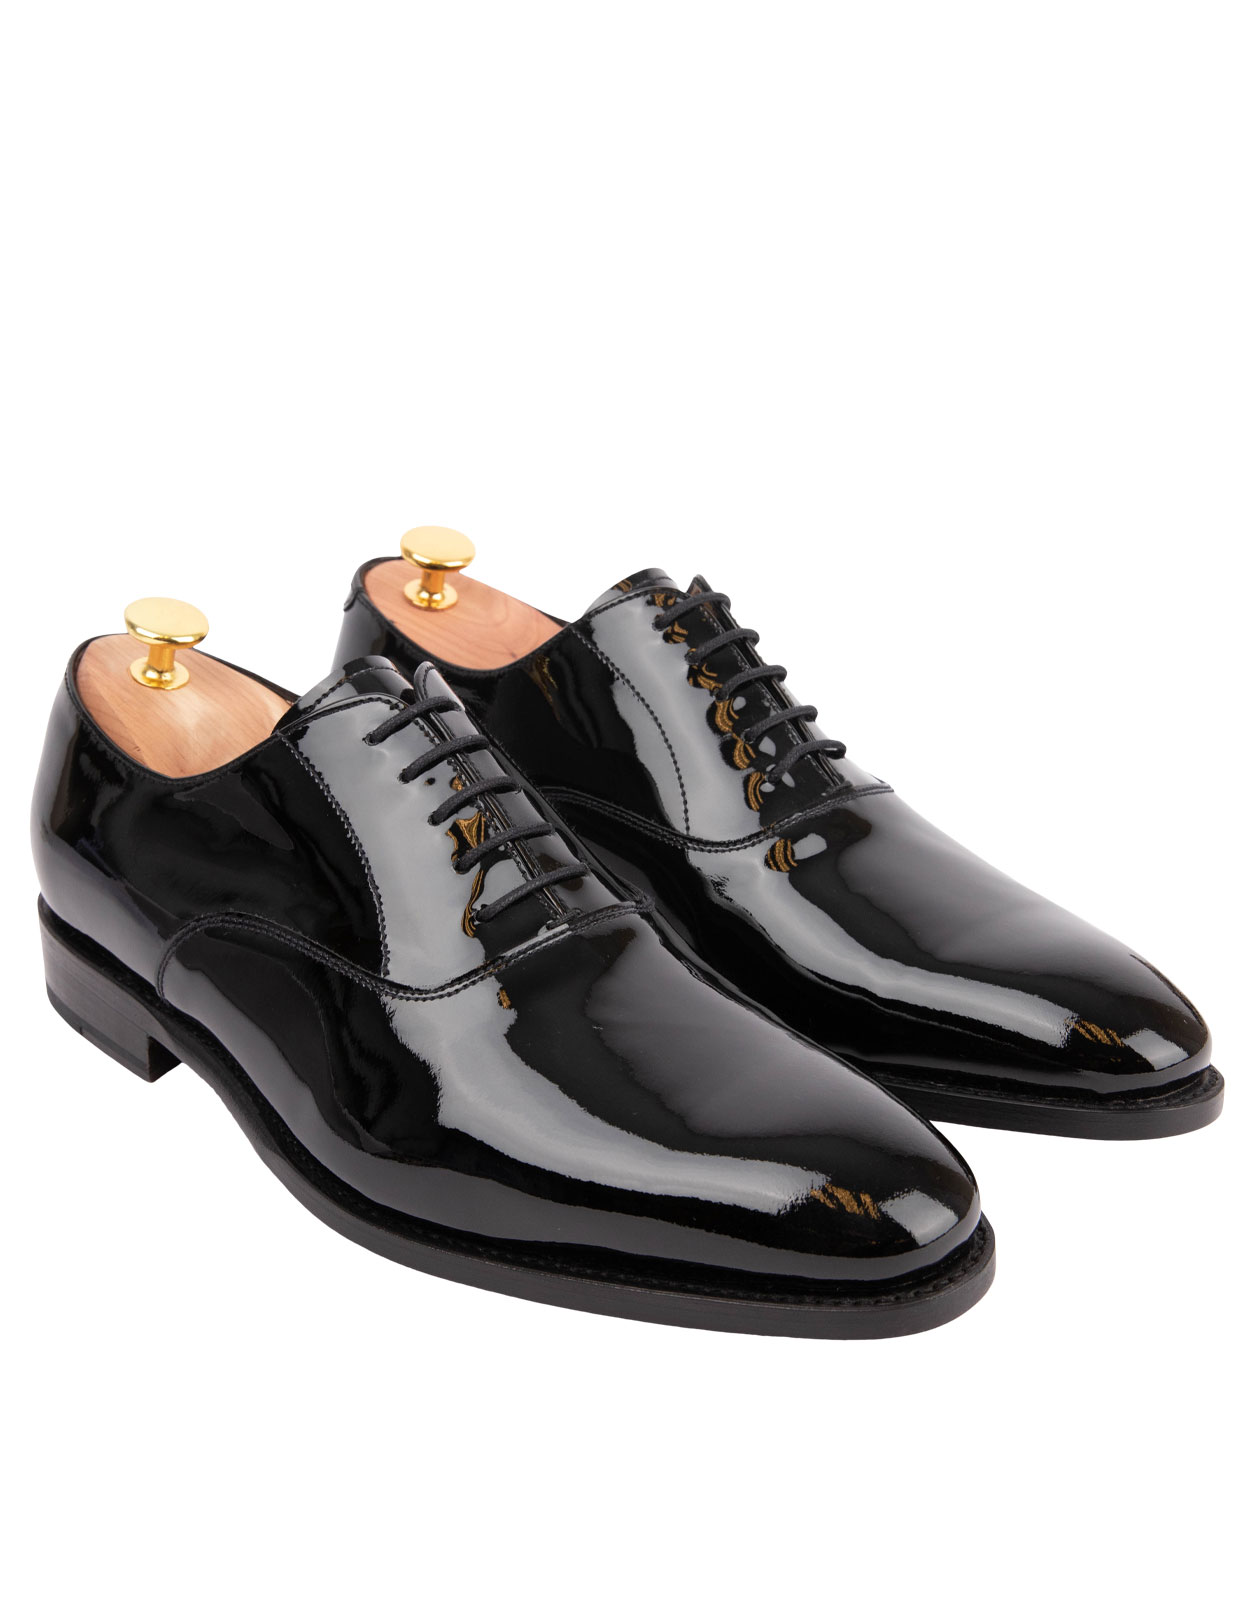 Patent Leather Oxford Shoe Black